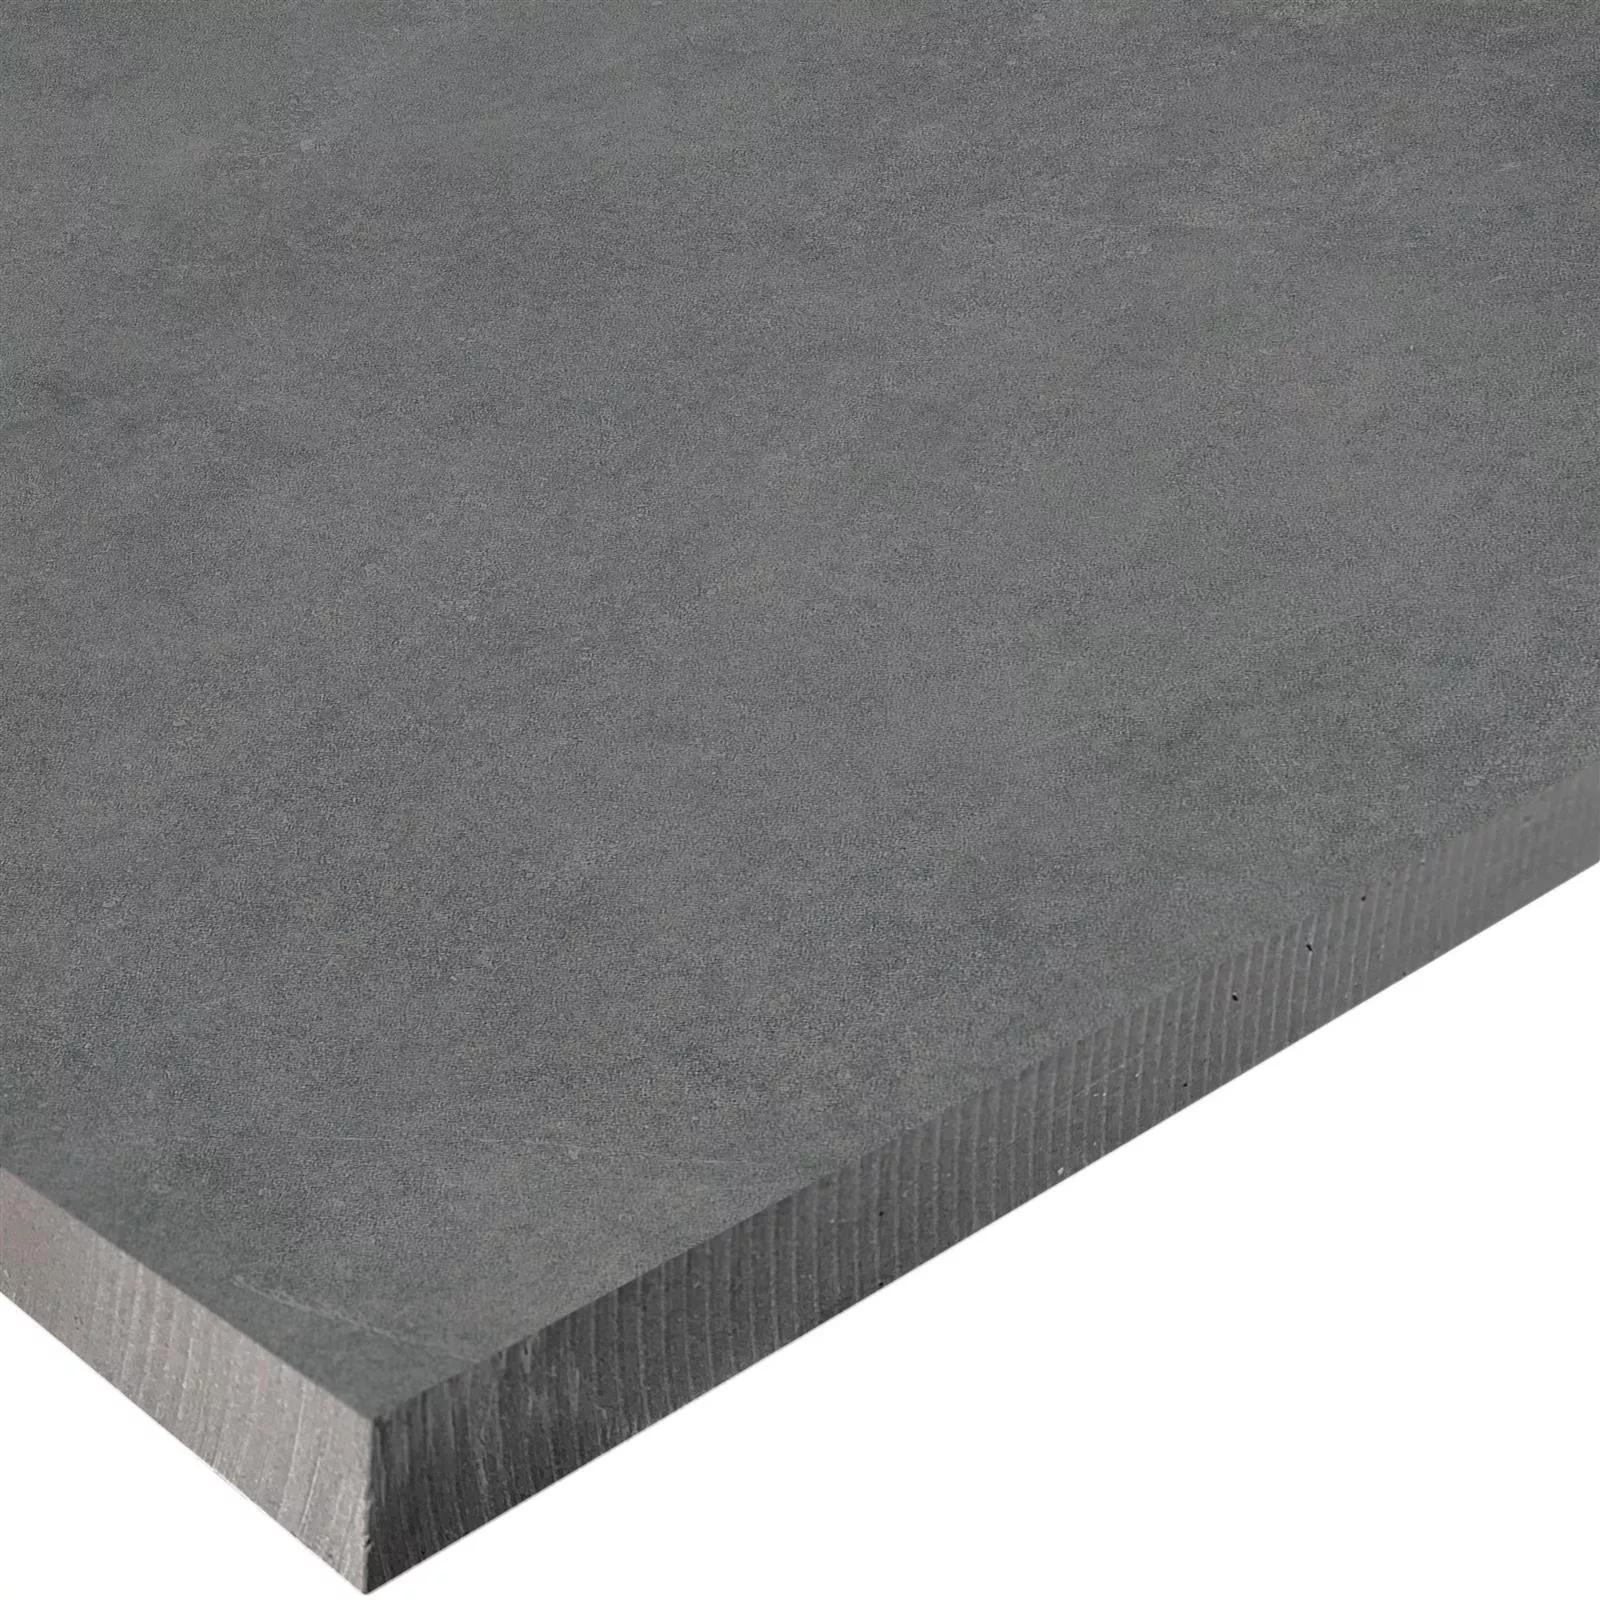 Terasové Desky Cementový Vzhled Newland Antracitová 60x60x3cm